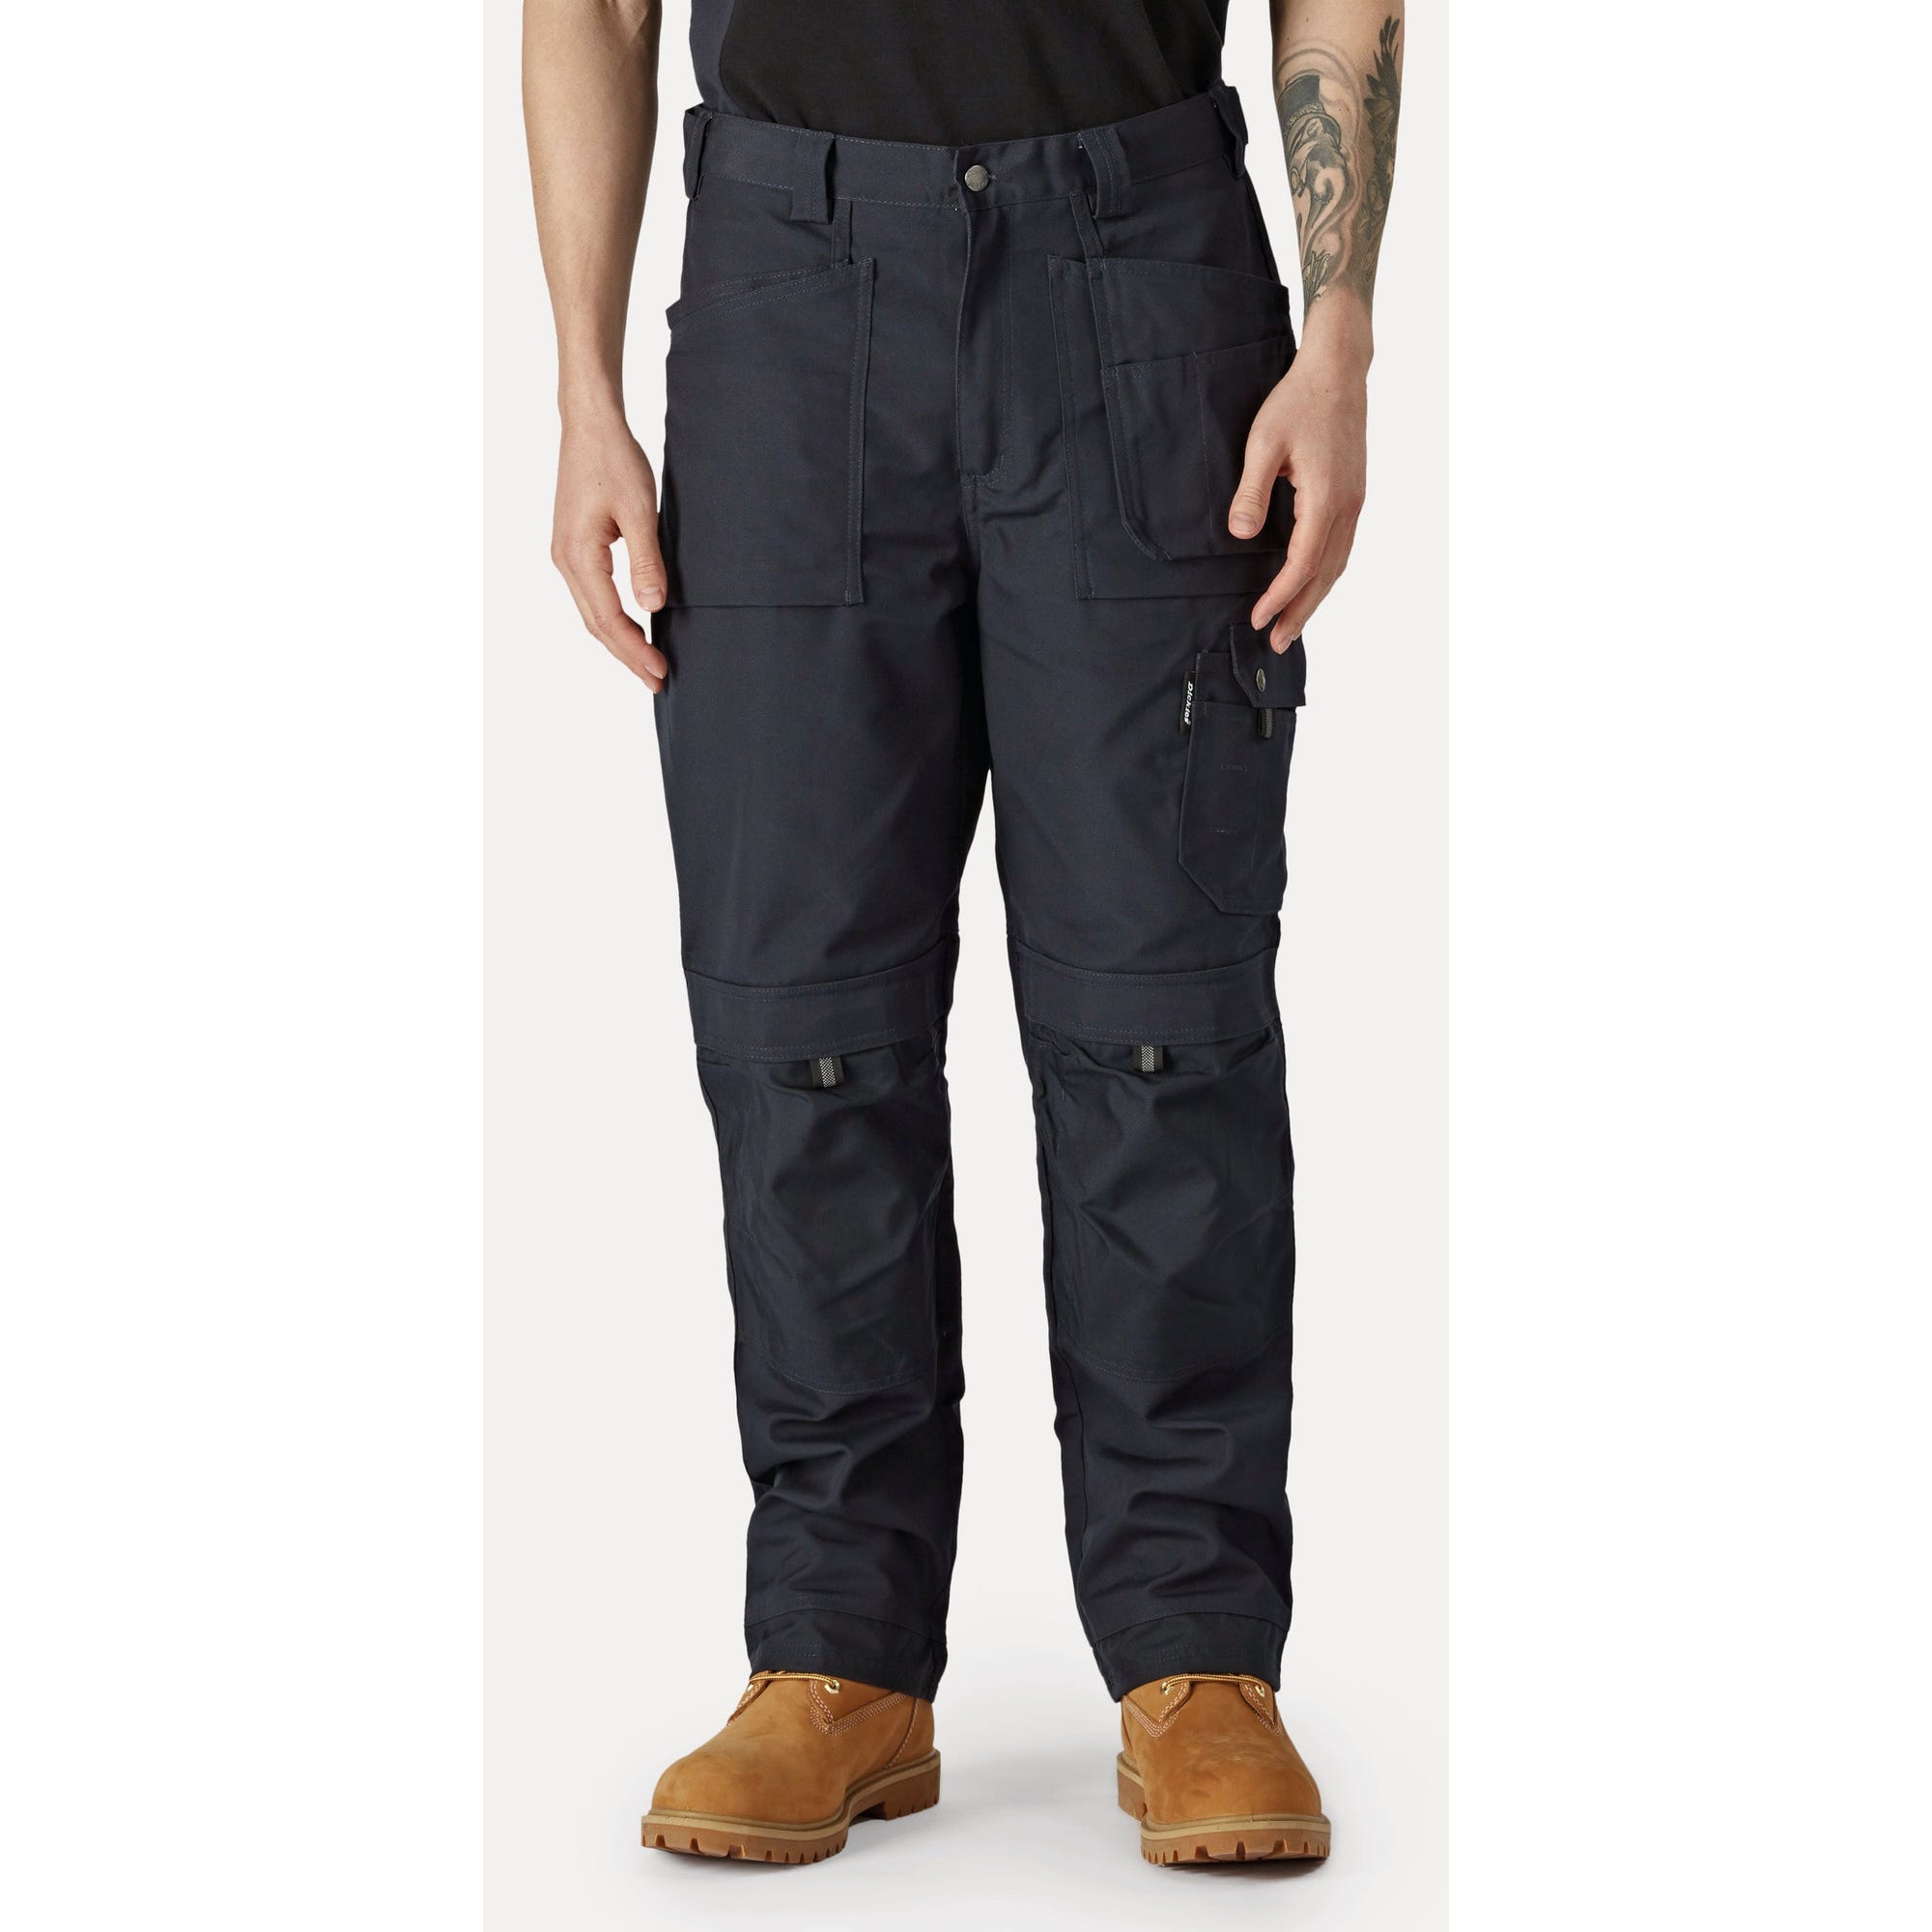 Pantalon Eisenhower multi-poches Noir - Dickies - Taille 48 5